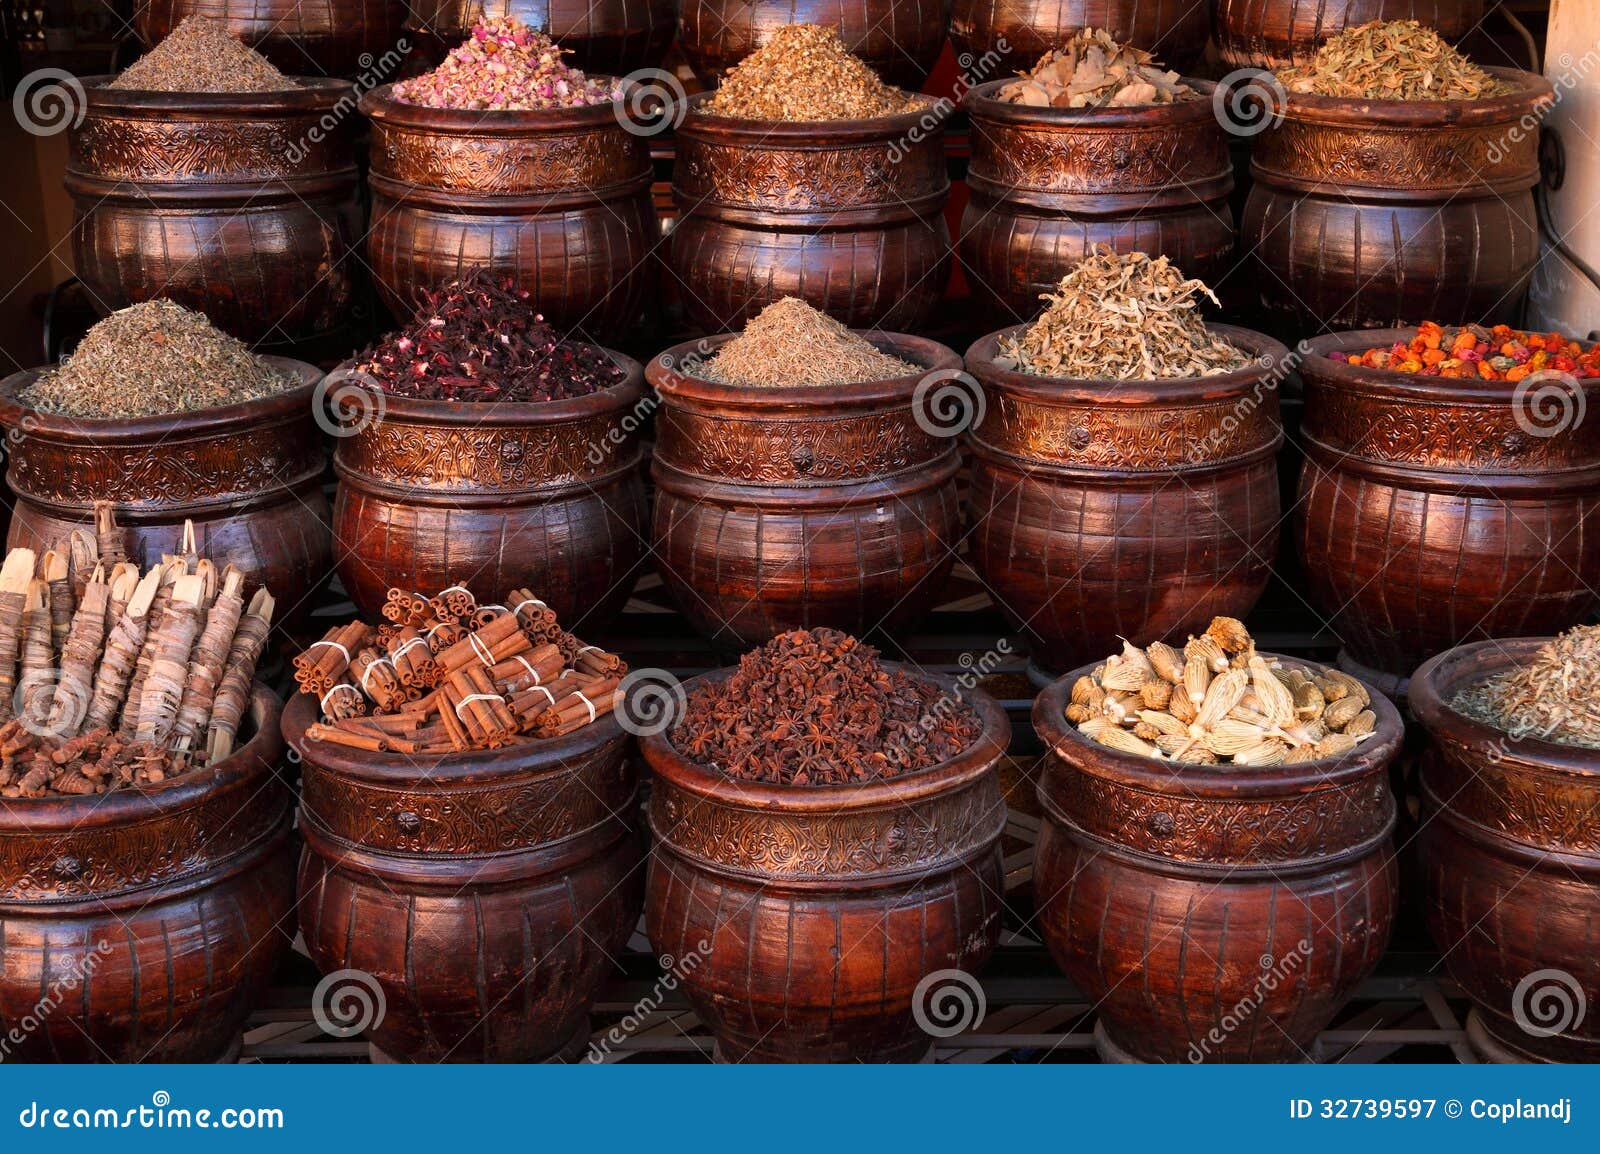 marrakesh spices in pots, medina souk